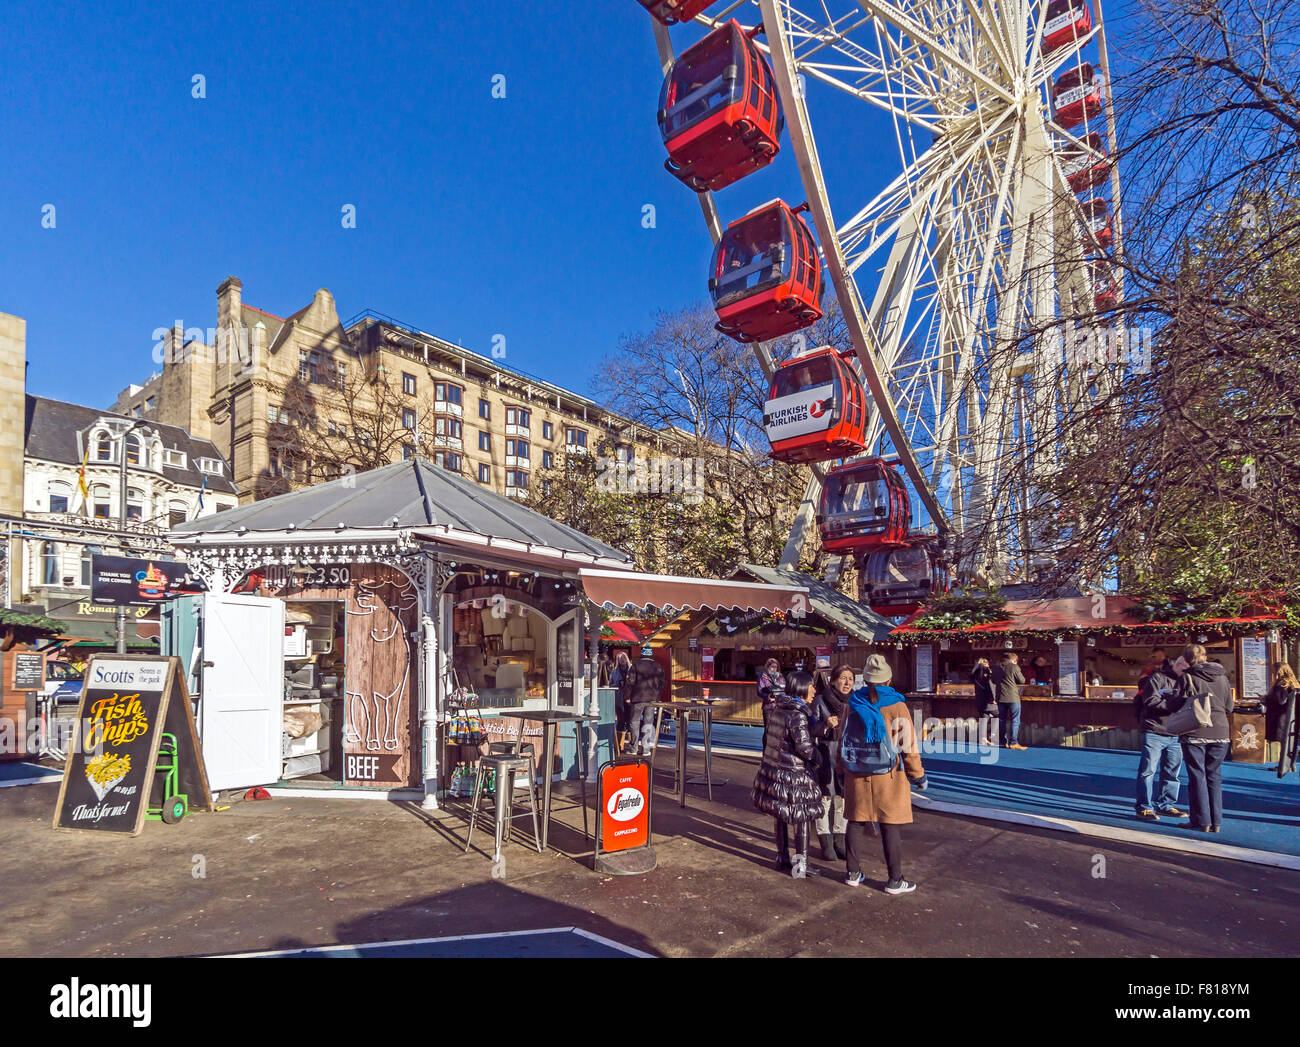 Edinburgh Christmas market 2015 with market stalls & Big Wheel Stock Photo